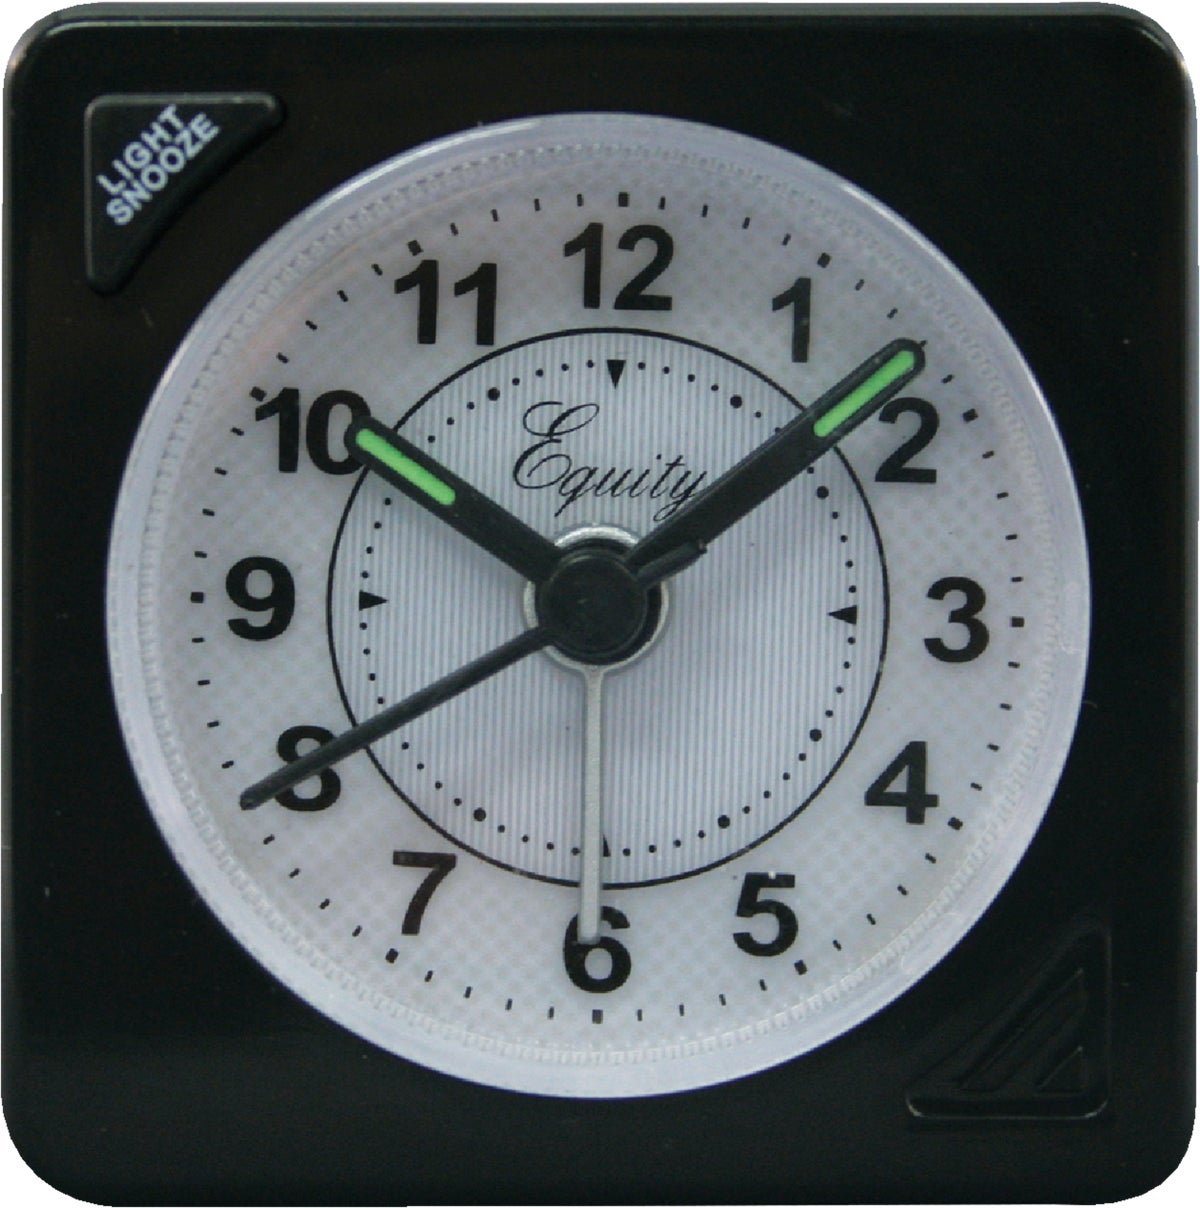 Equity by La Crosse 20080 Folding Travel Quartz Alarm Clock 